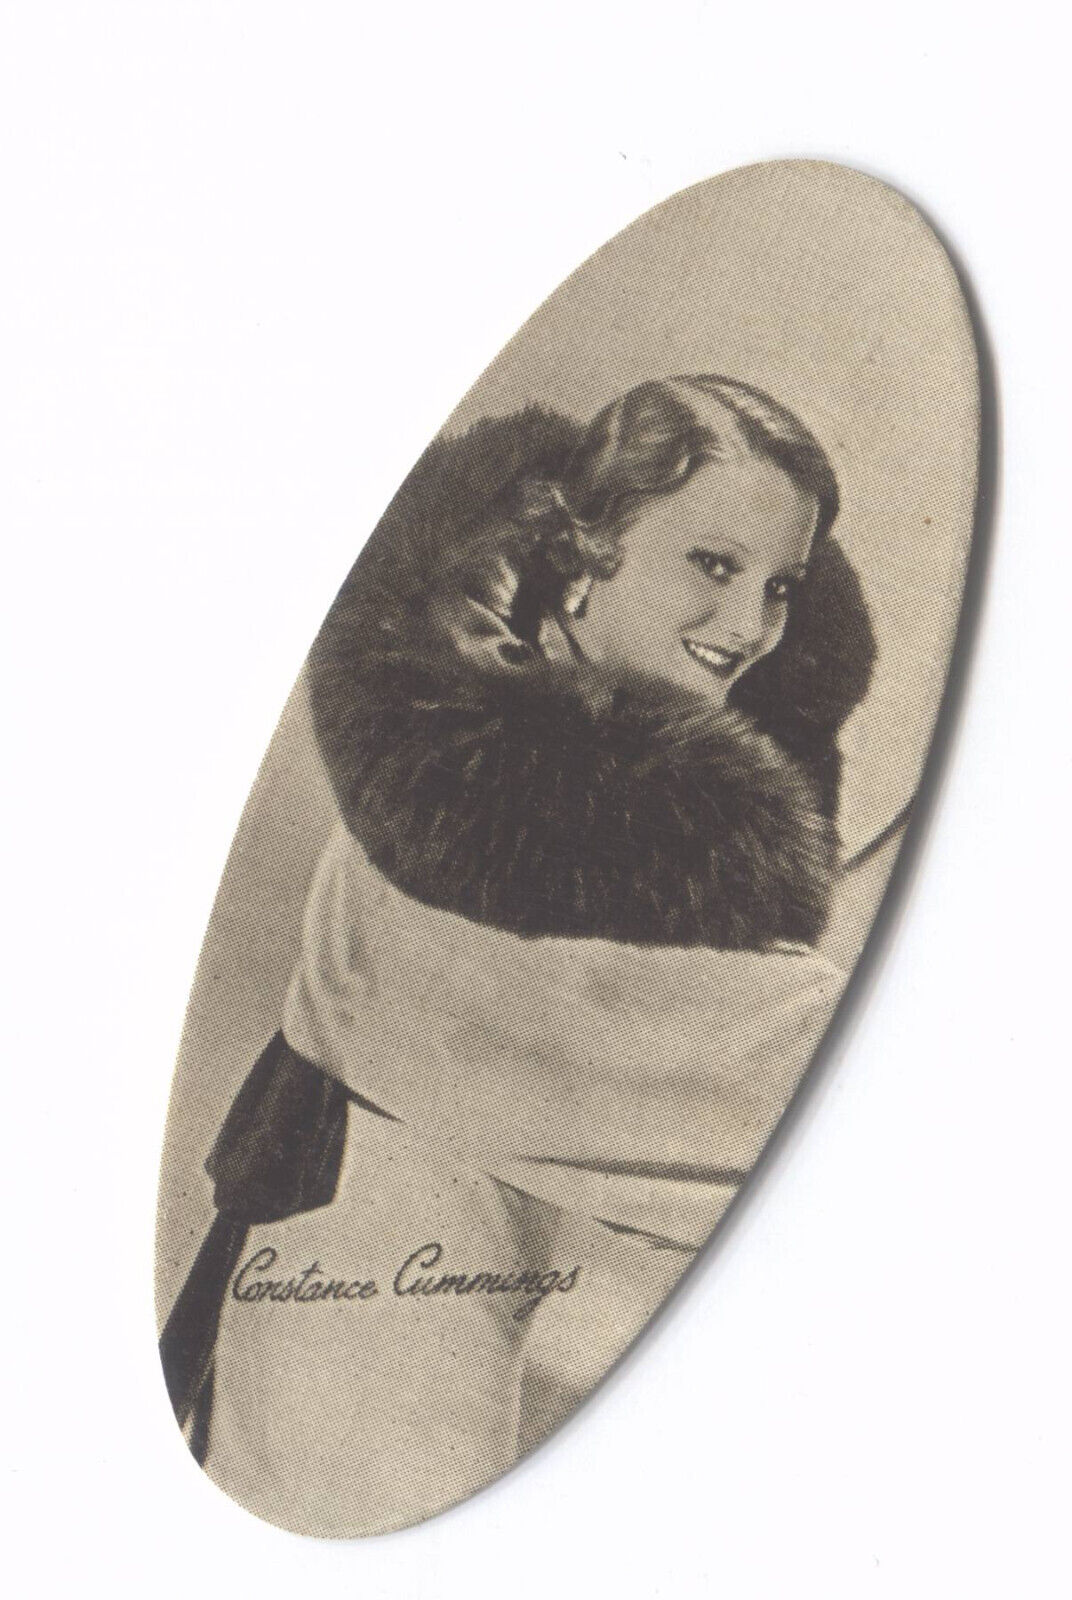 CONSTANCE CUMMINGS - 1934 Carreras Film Stars Card - OVAL SHAPE